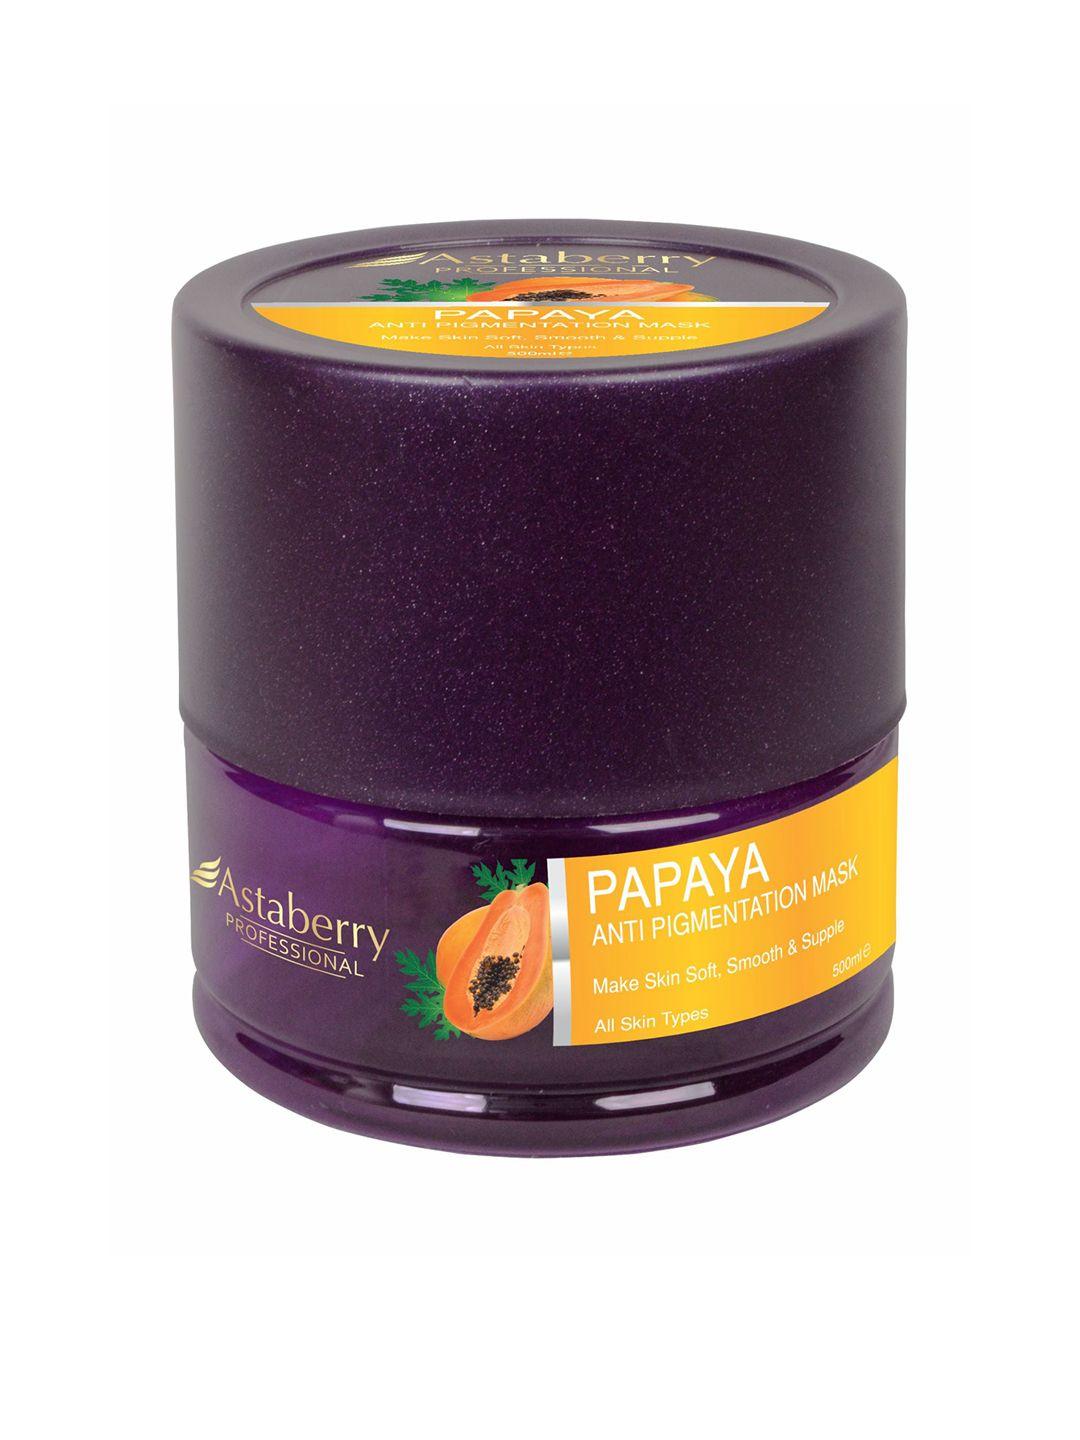 astaberry unisex professional anti-pigmentation papaya mask -500ml